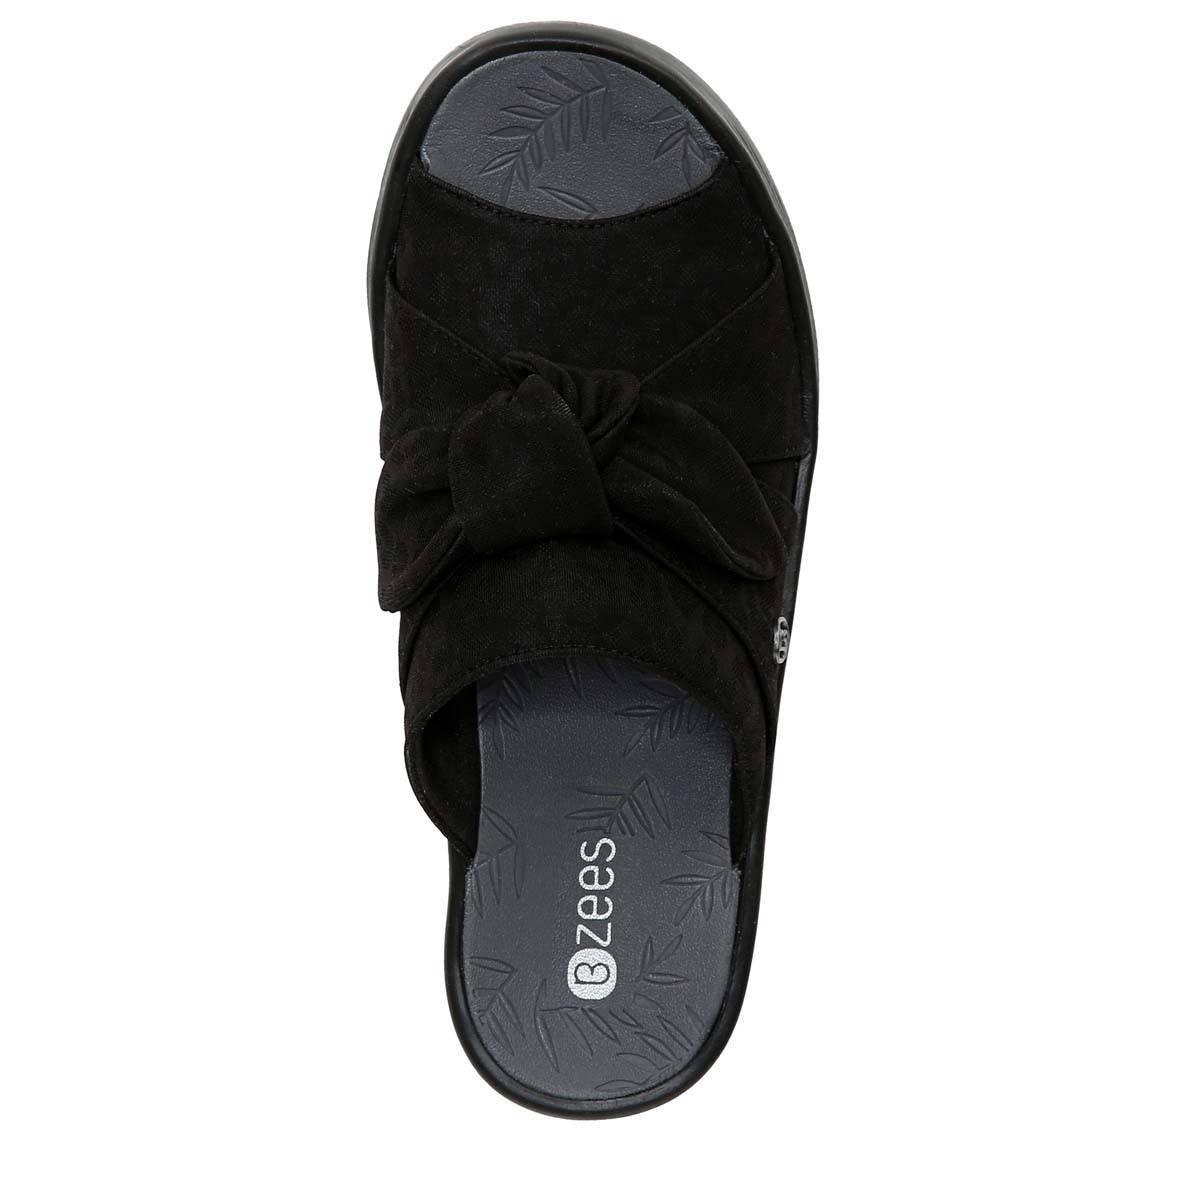 BZees Smile Wedge Slide Sandal Product Image